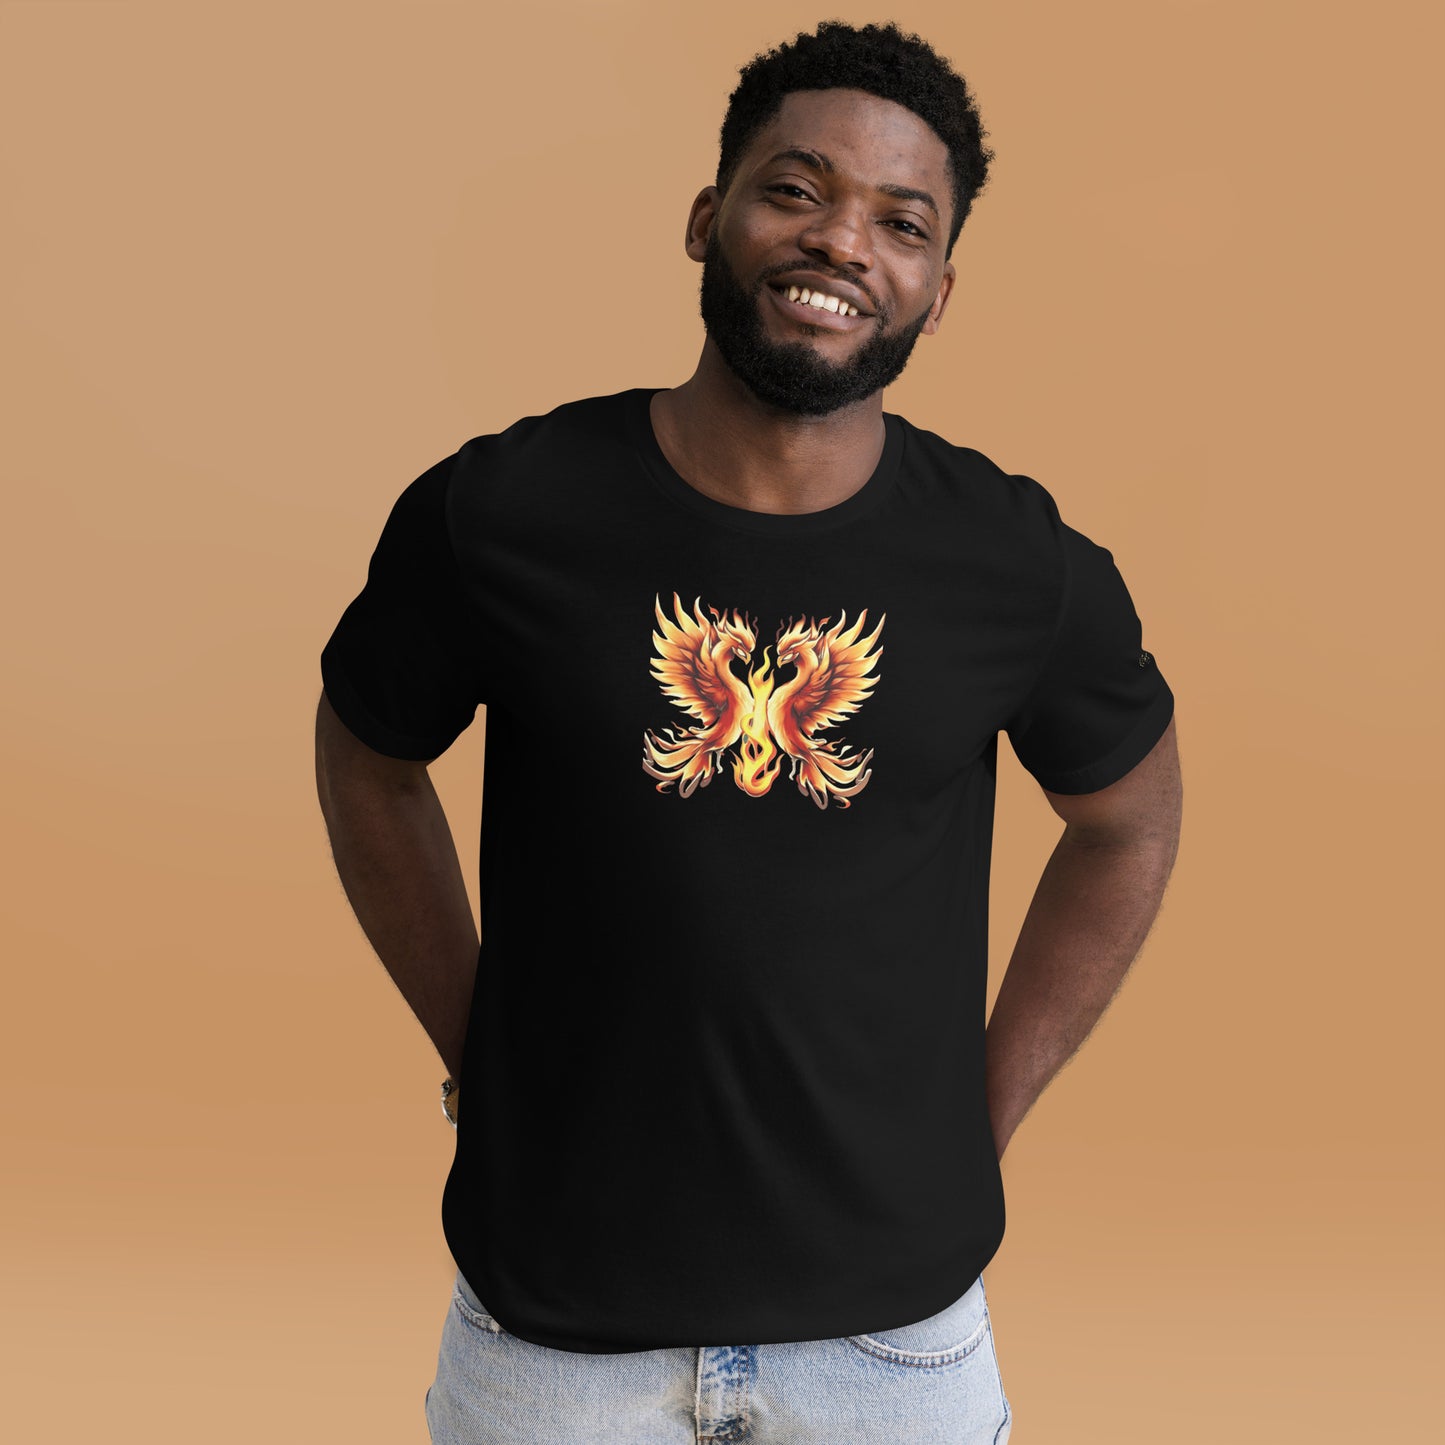 Flaming t-shirt